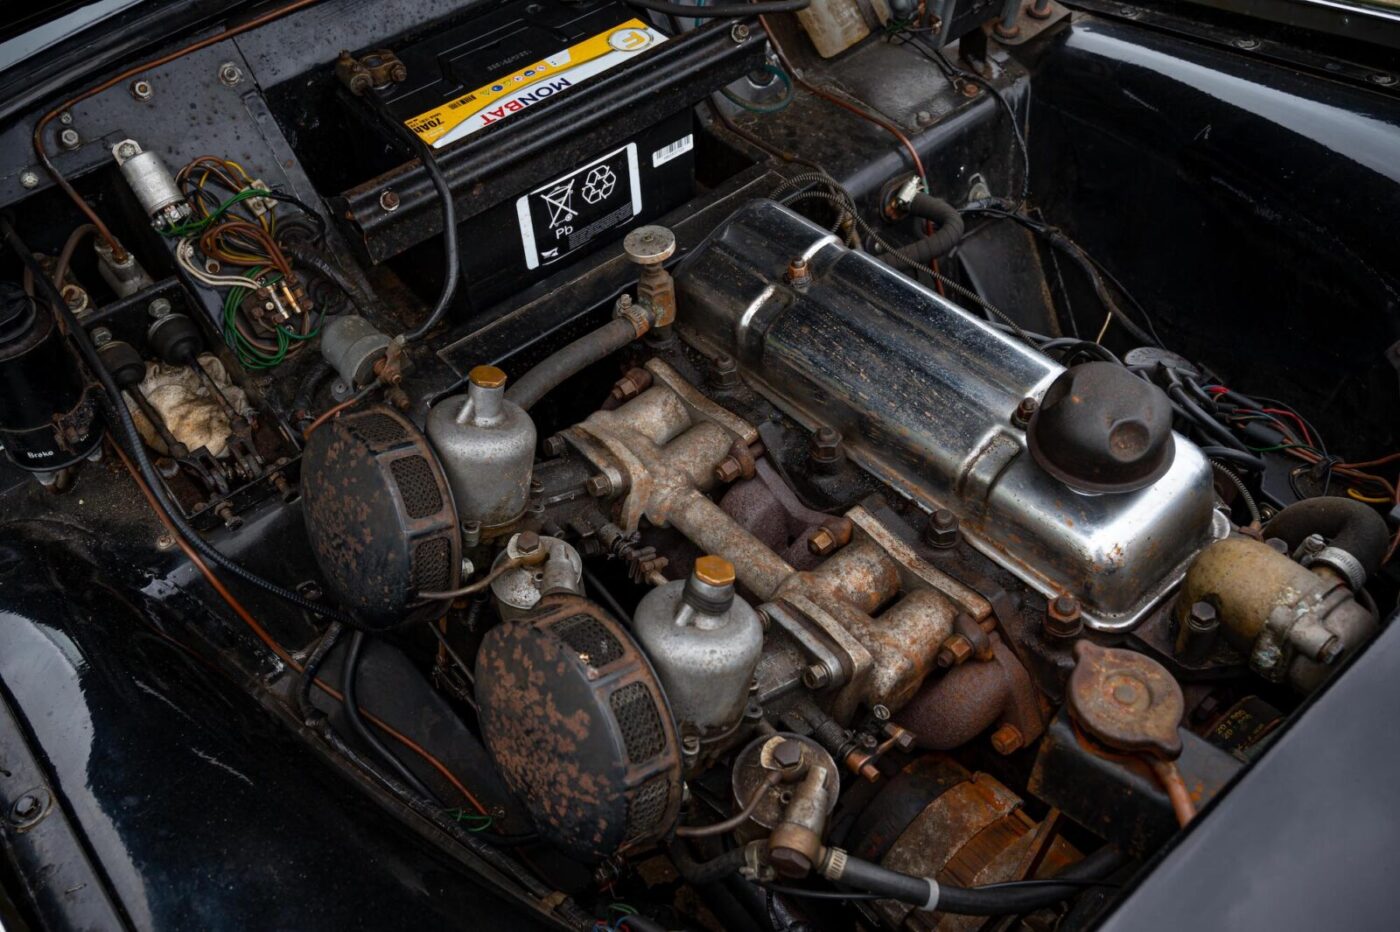 Triumph TR3A engine